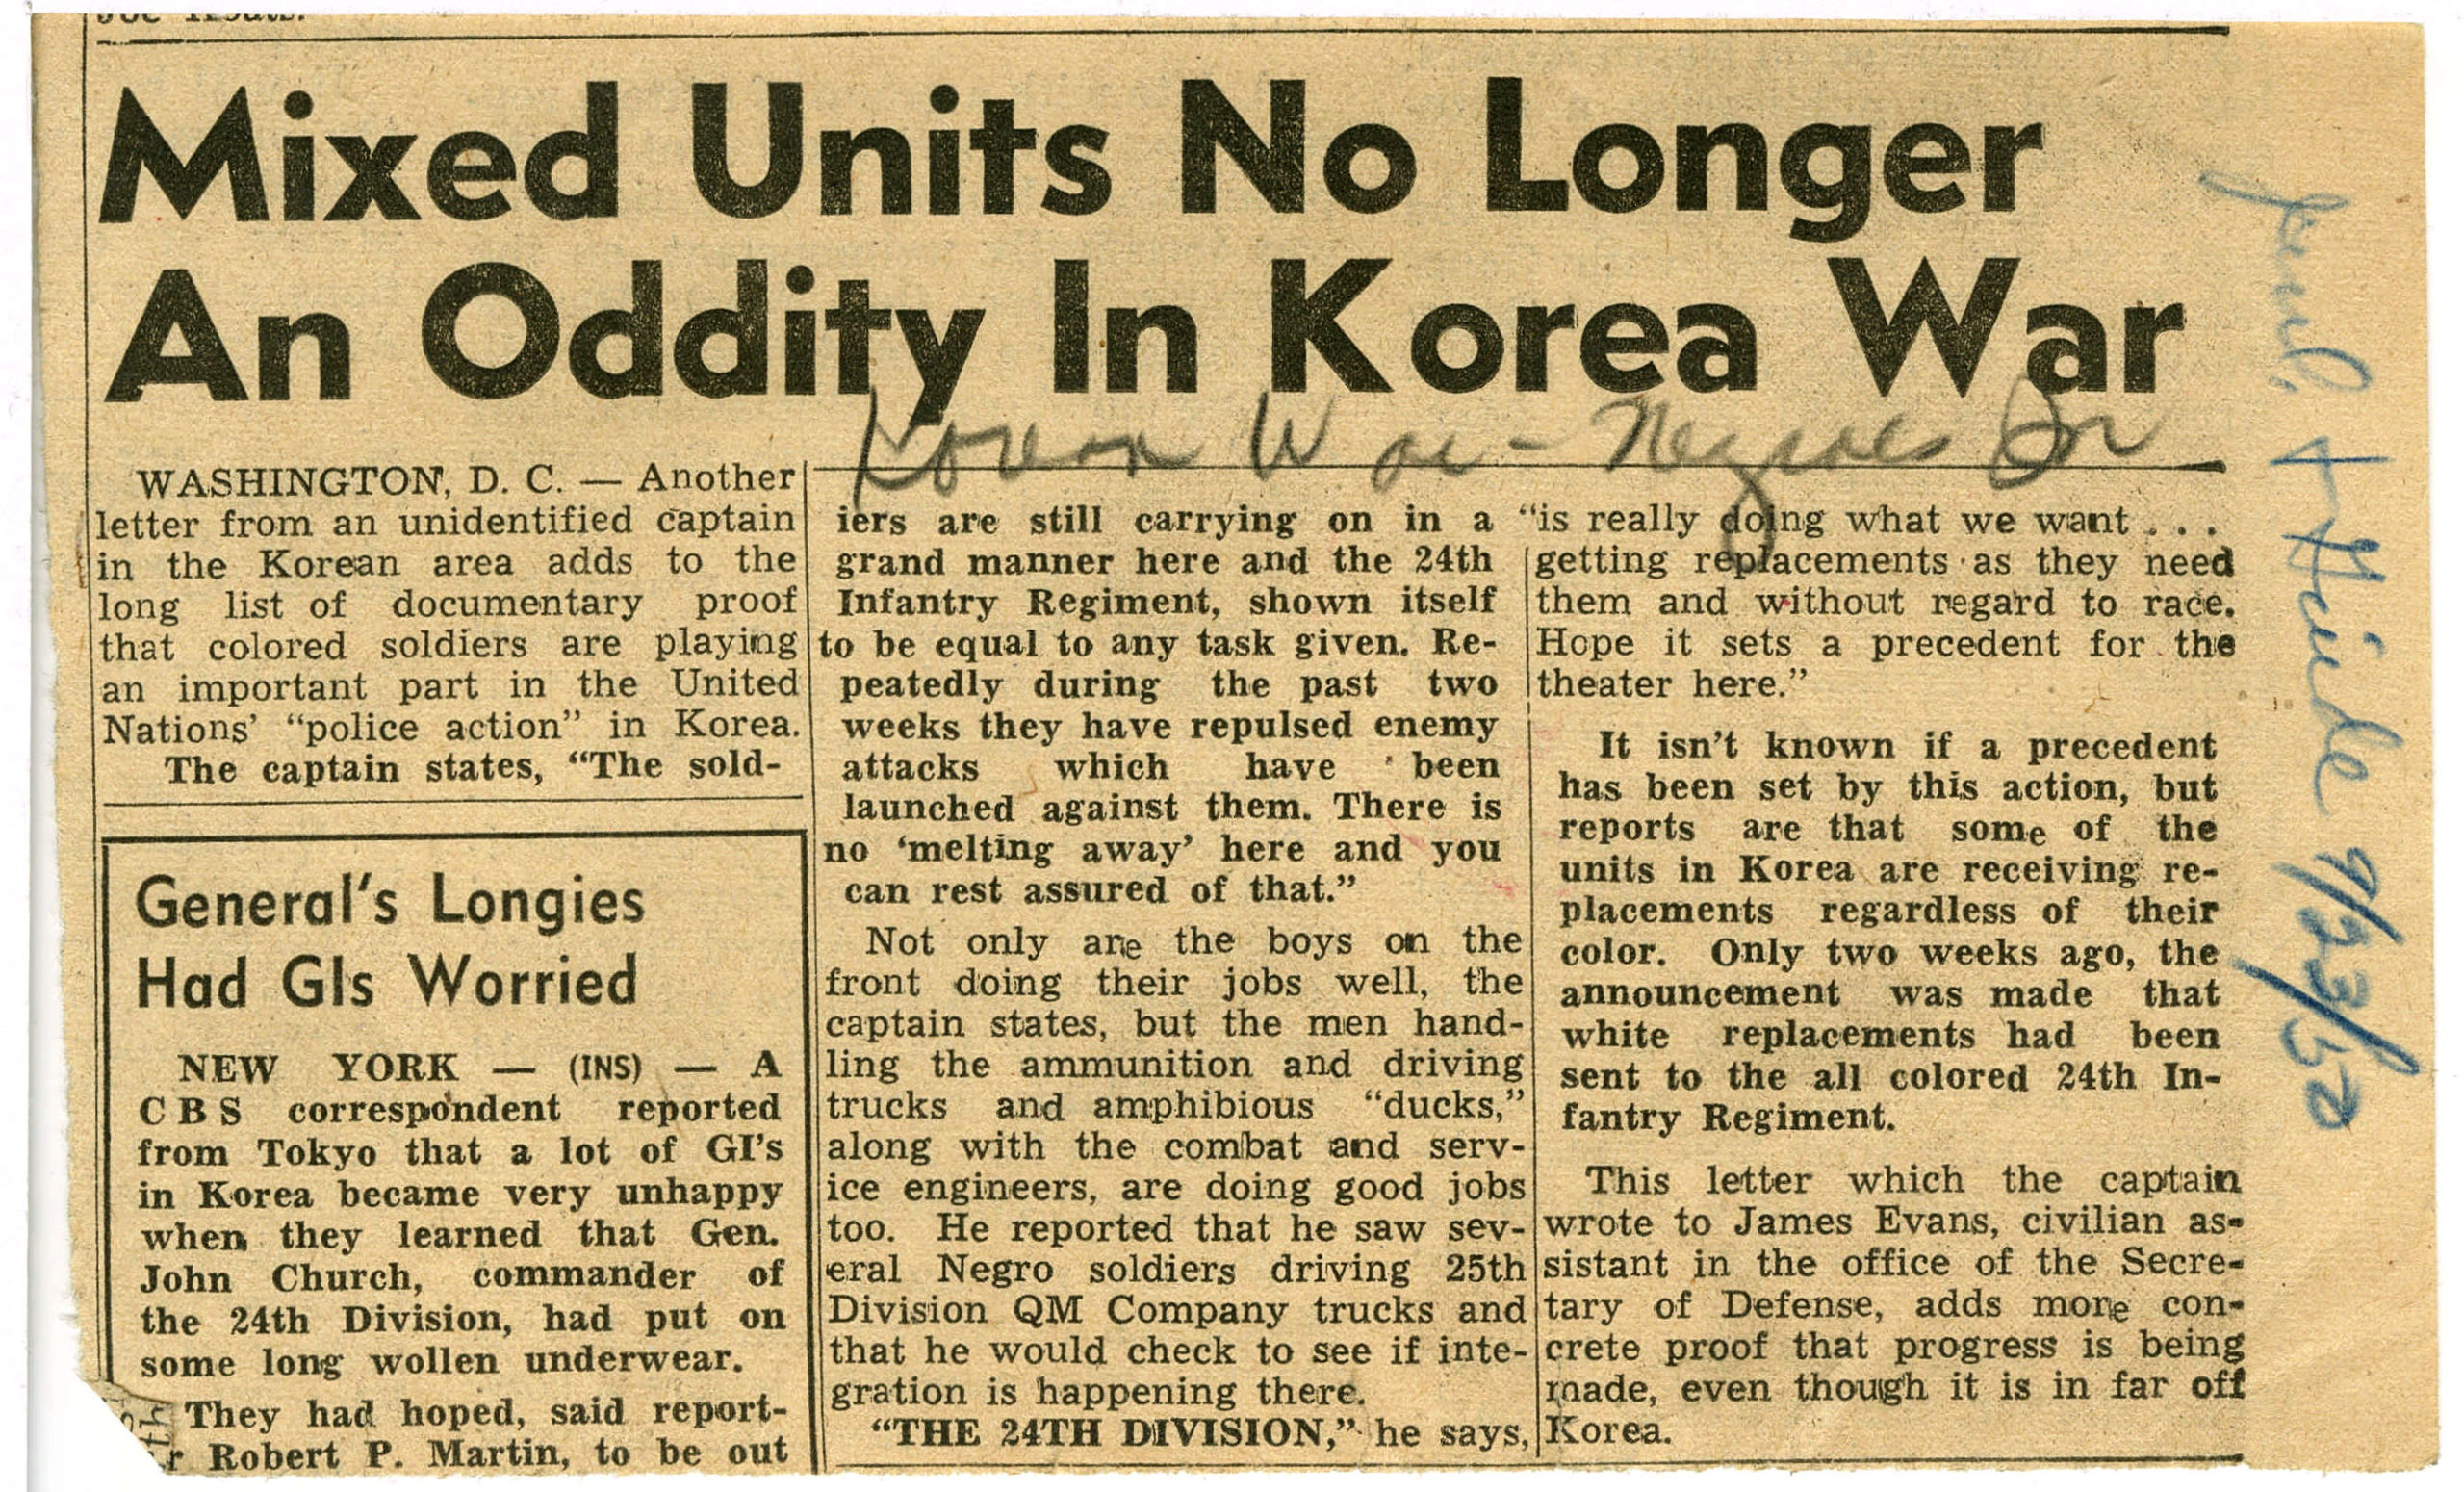 Mixed Units No Longer an Oddity in Korea War, Johnson Publishing Company1950 September 23Johnson Publishing Company clipping files collection